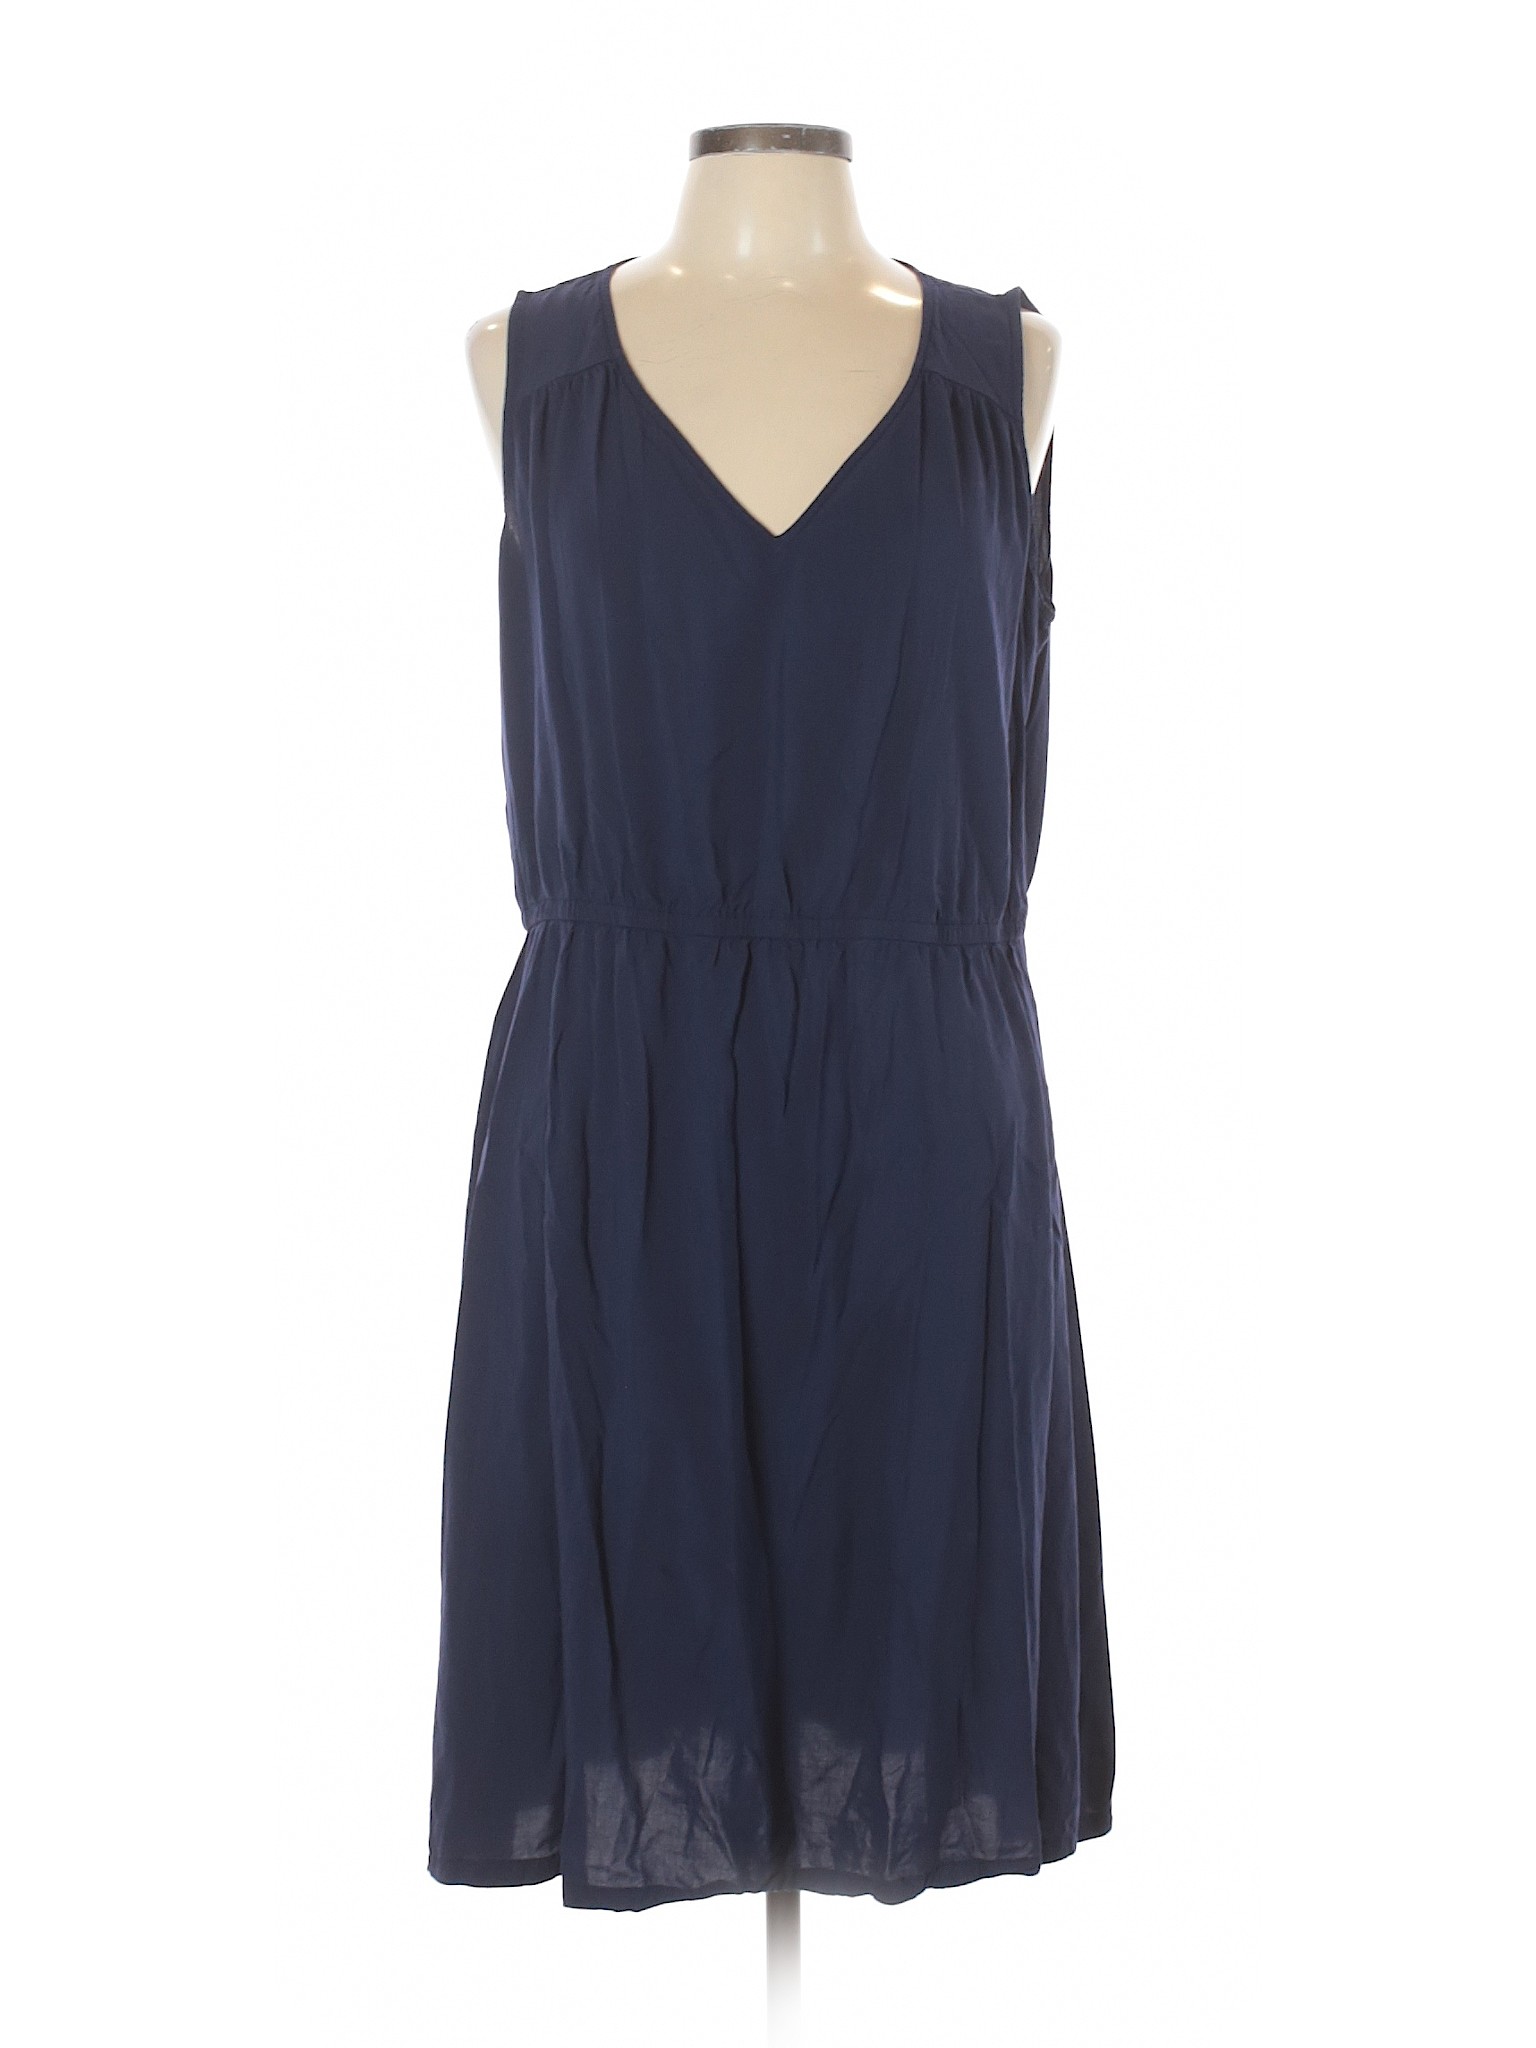 Old Navy Women Blue Casual Dress XL Tall | eBay